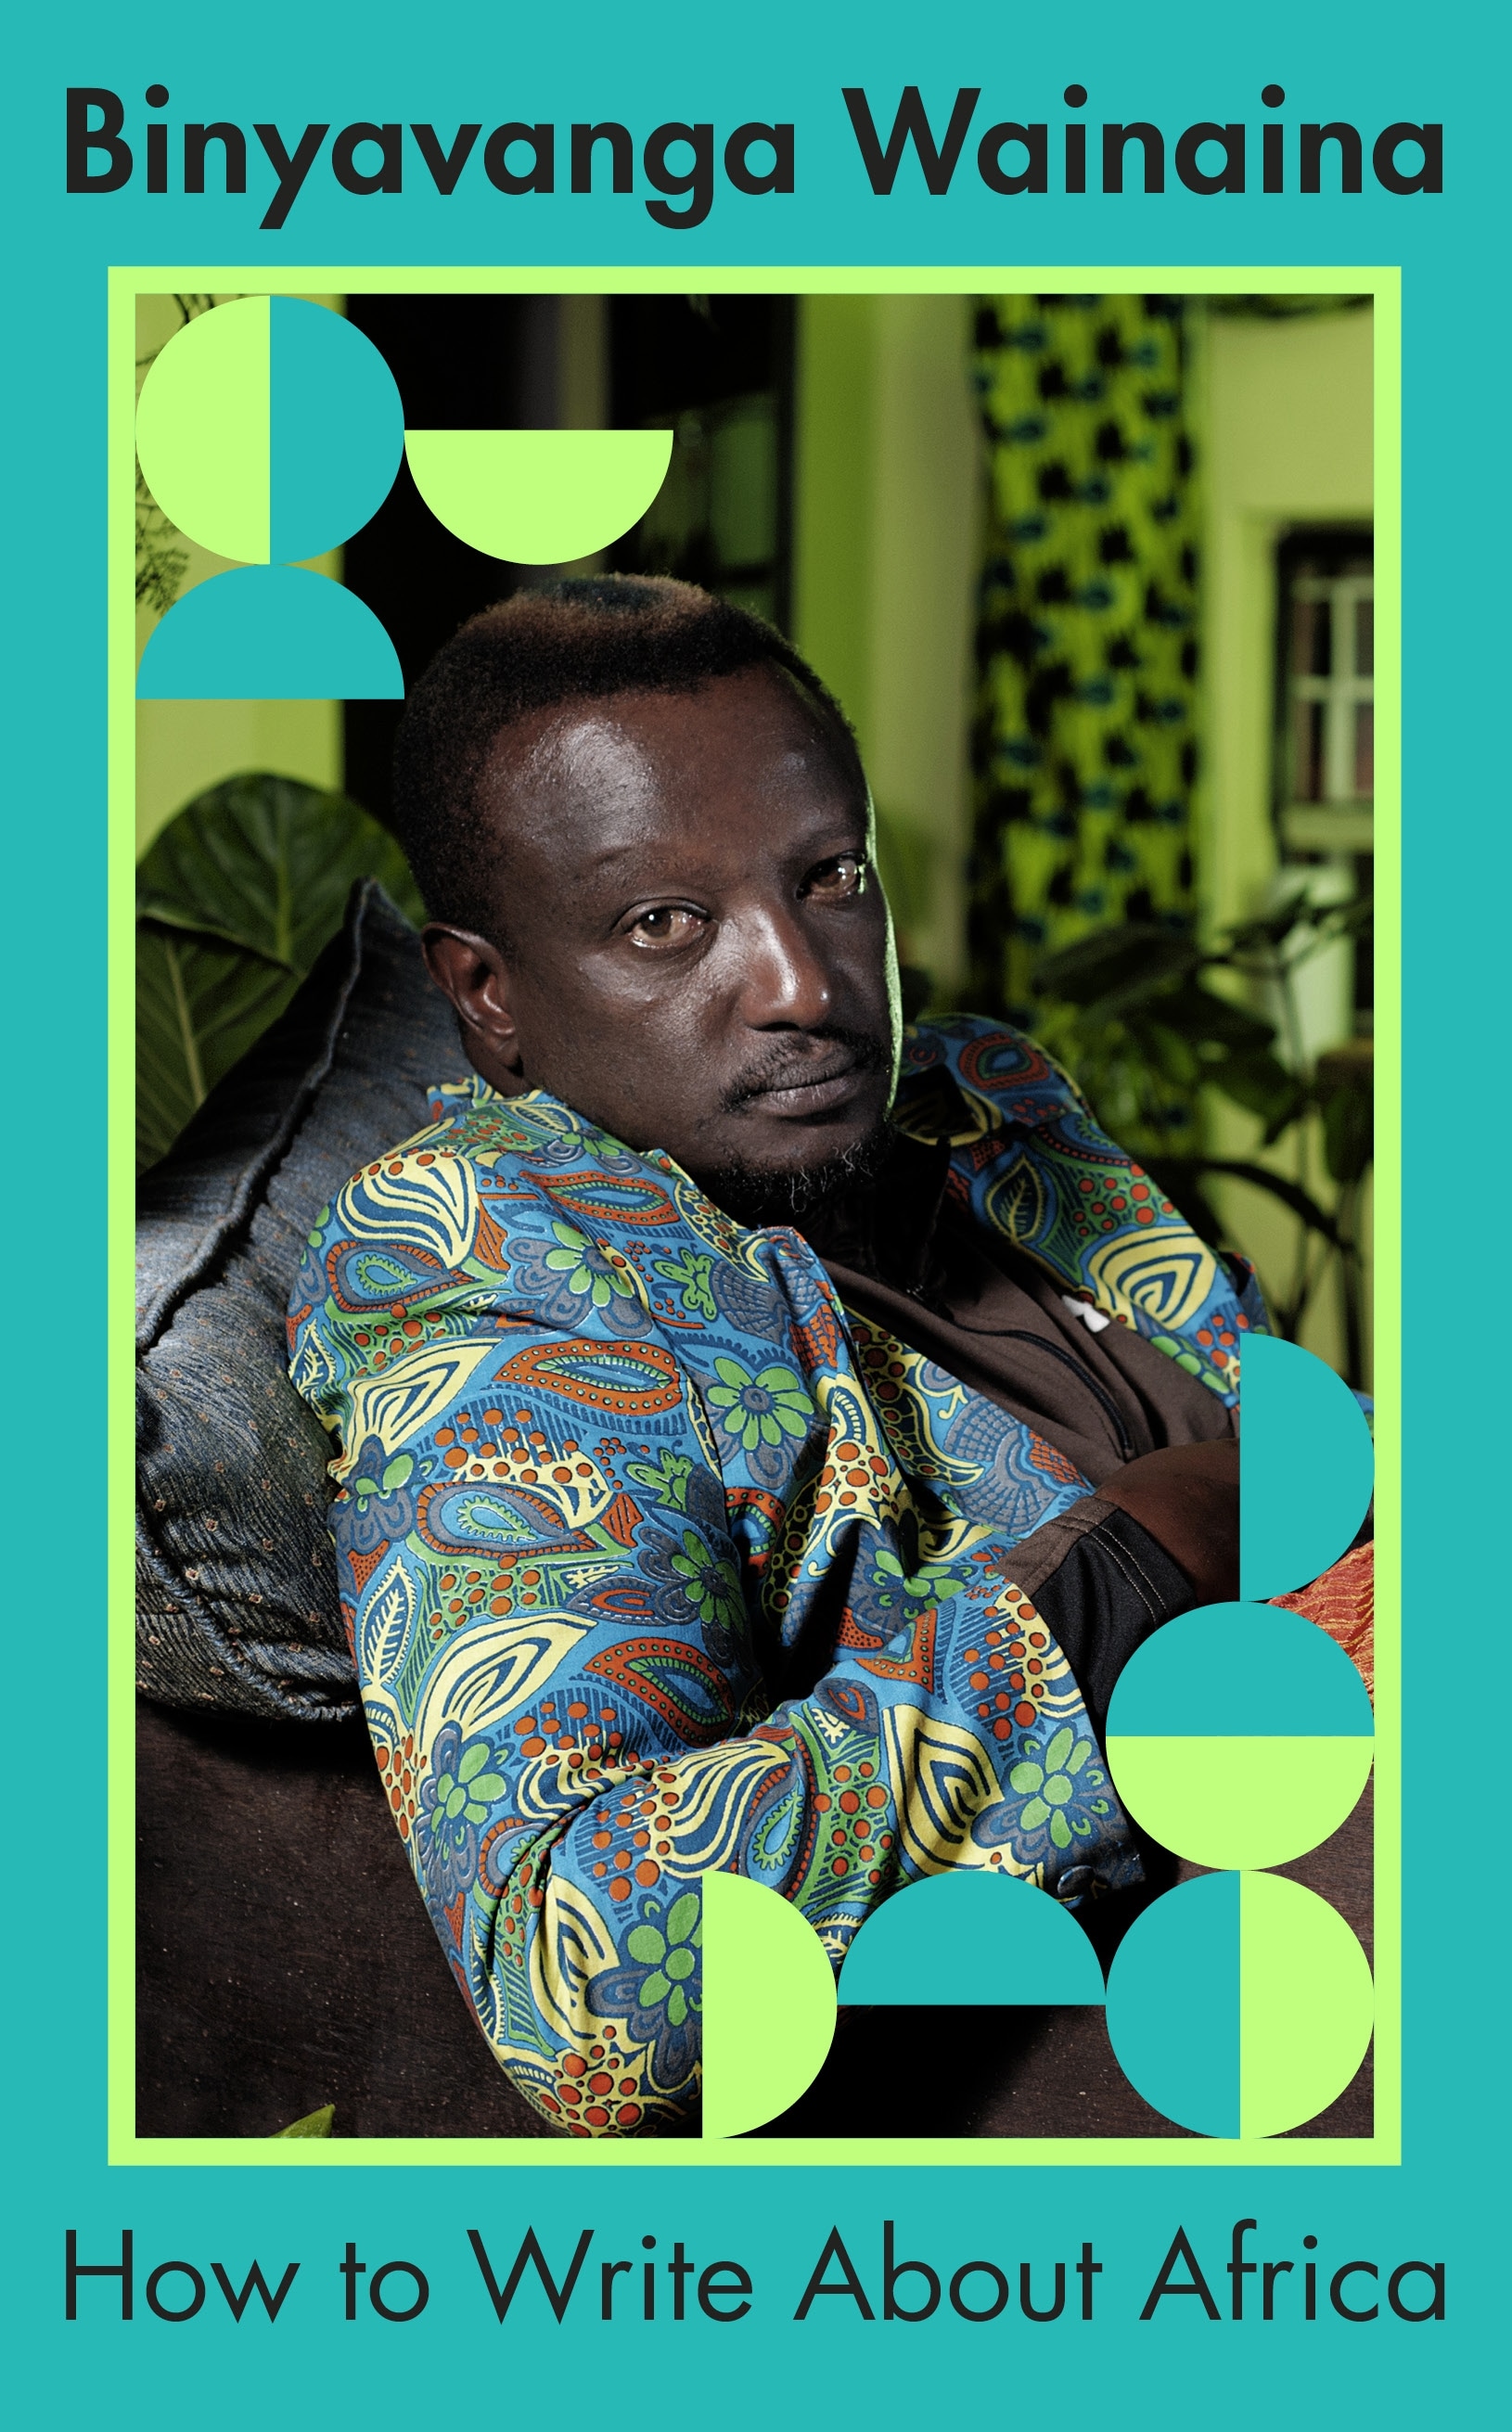 Book “How to Write About Africa” by Binyavanga Wainaina — September 29, 2022